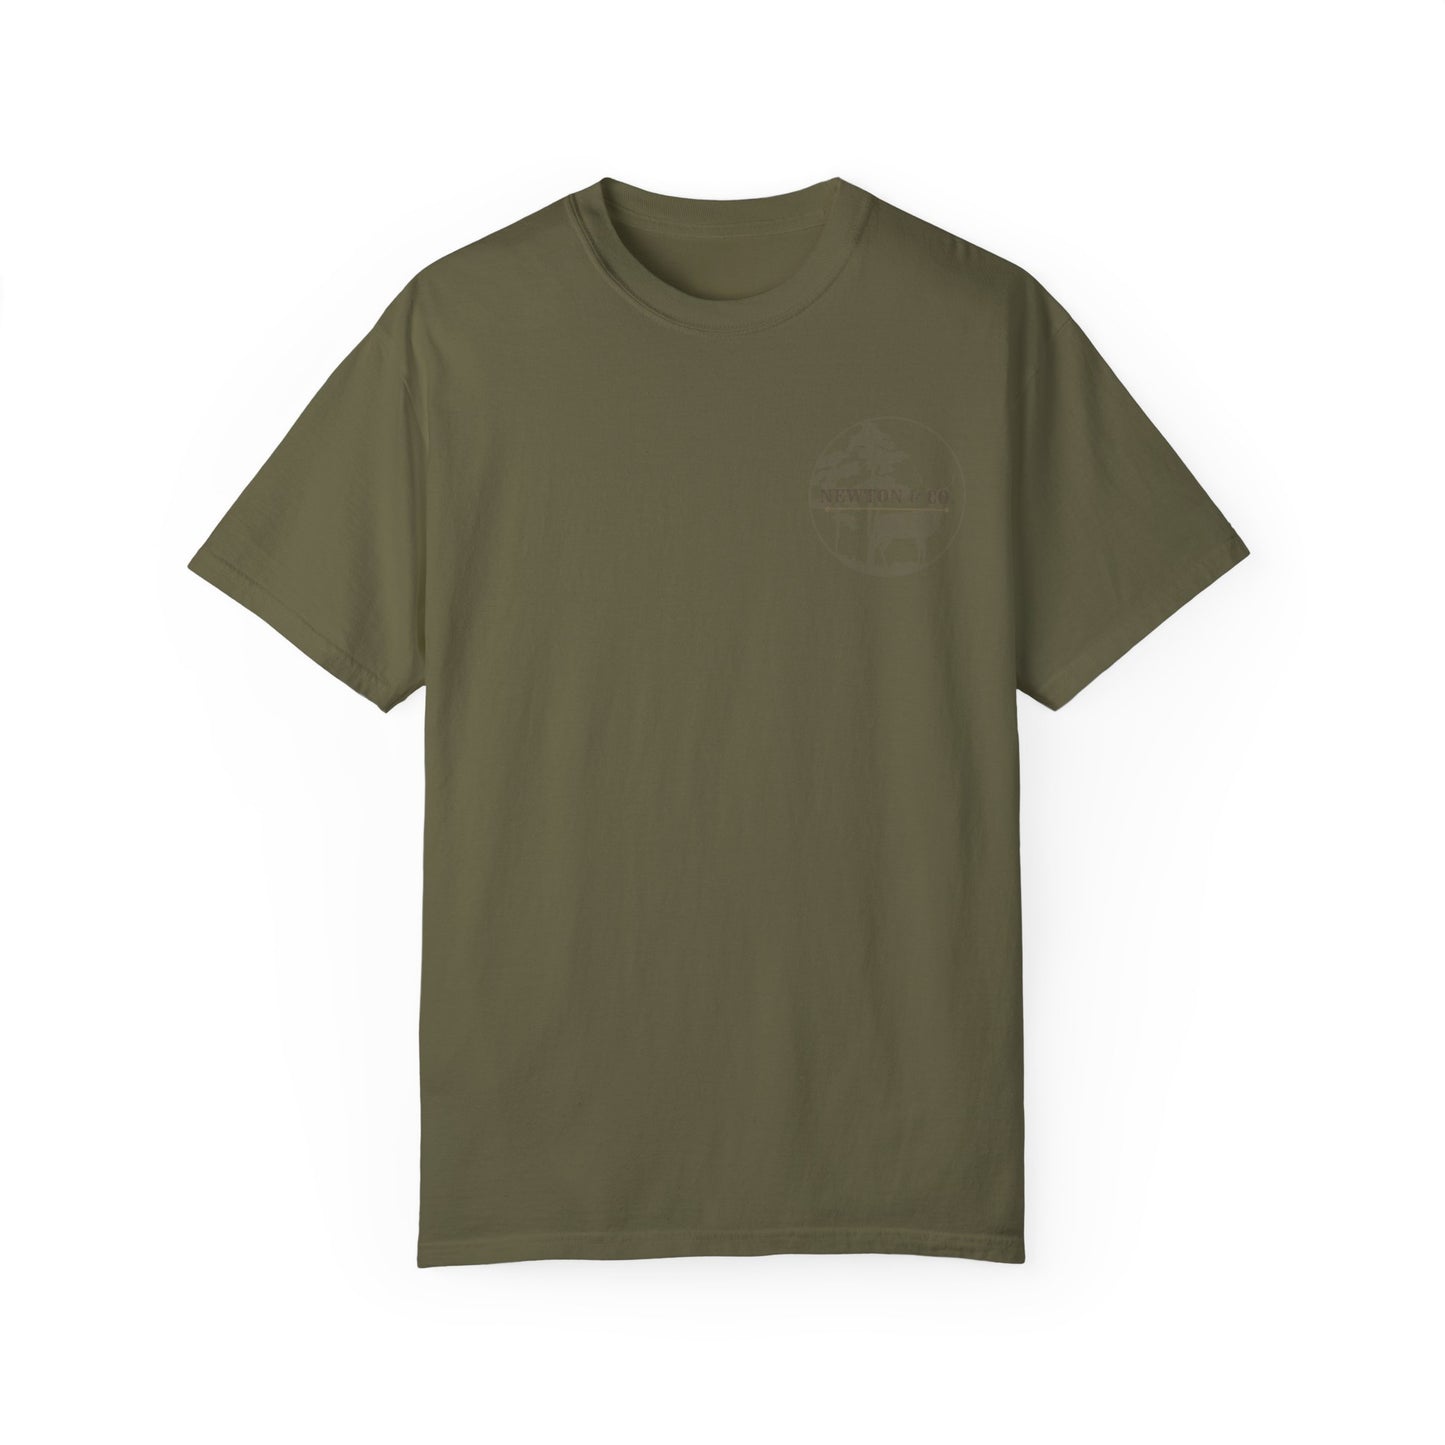 Newton & Co. Men & Women Comfort Colors T-shirt